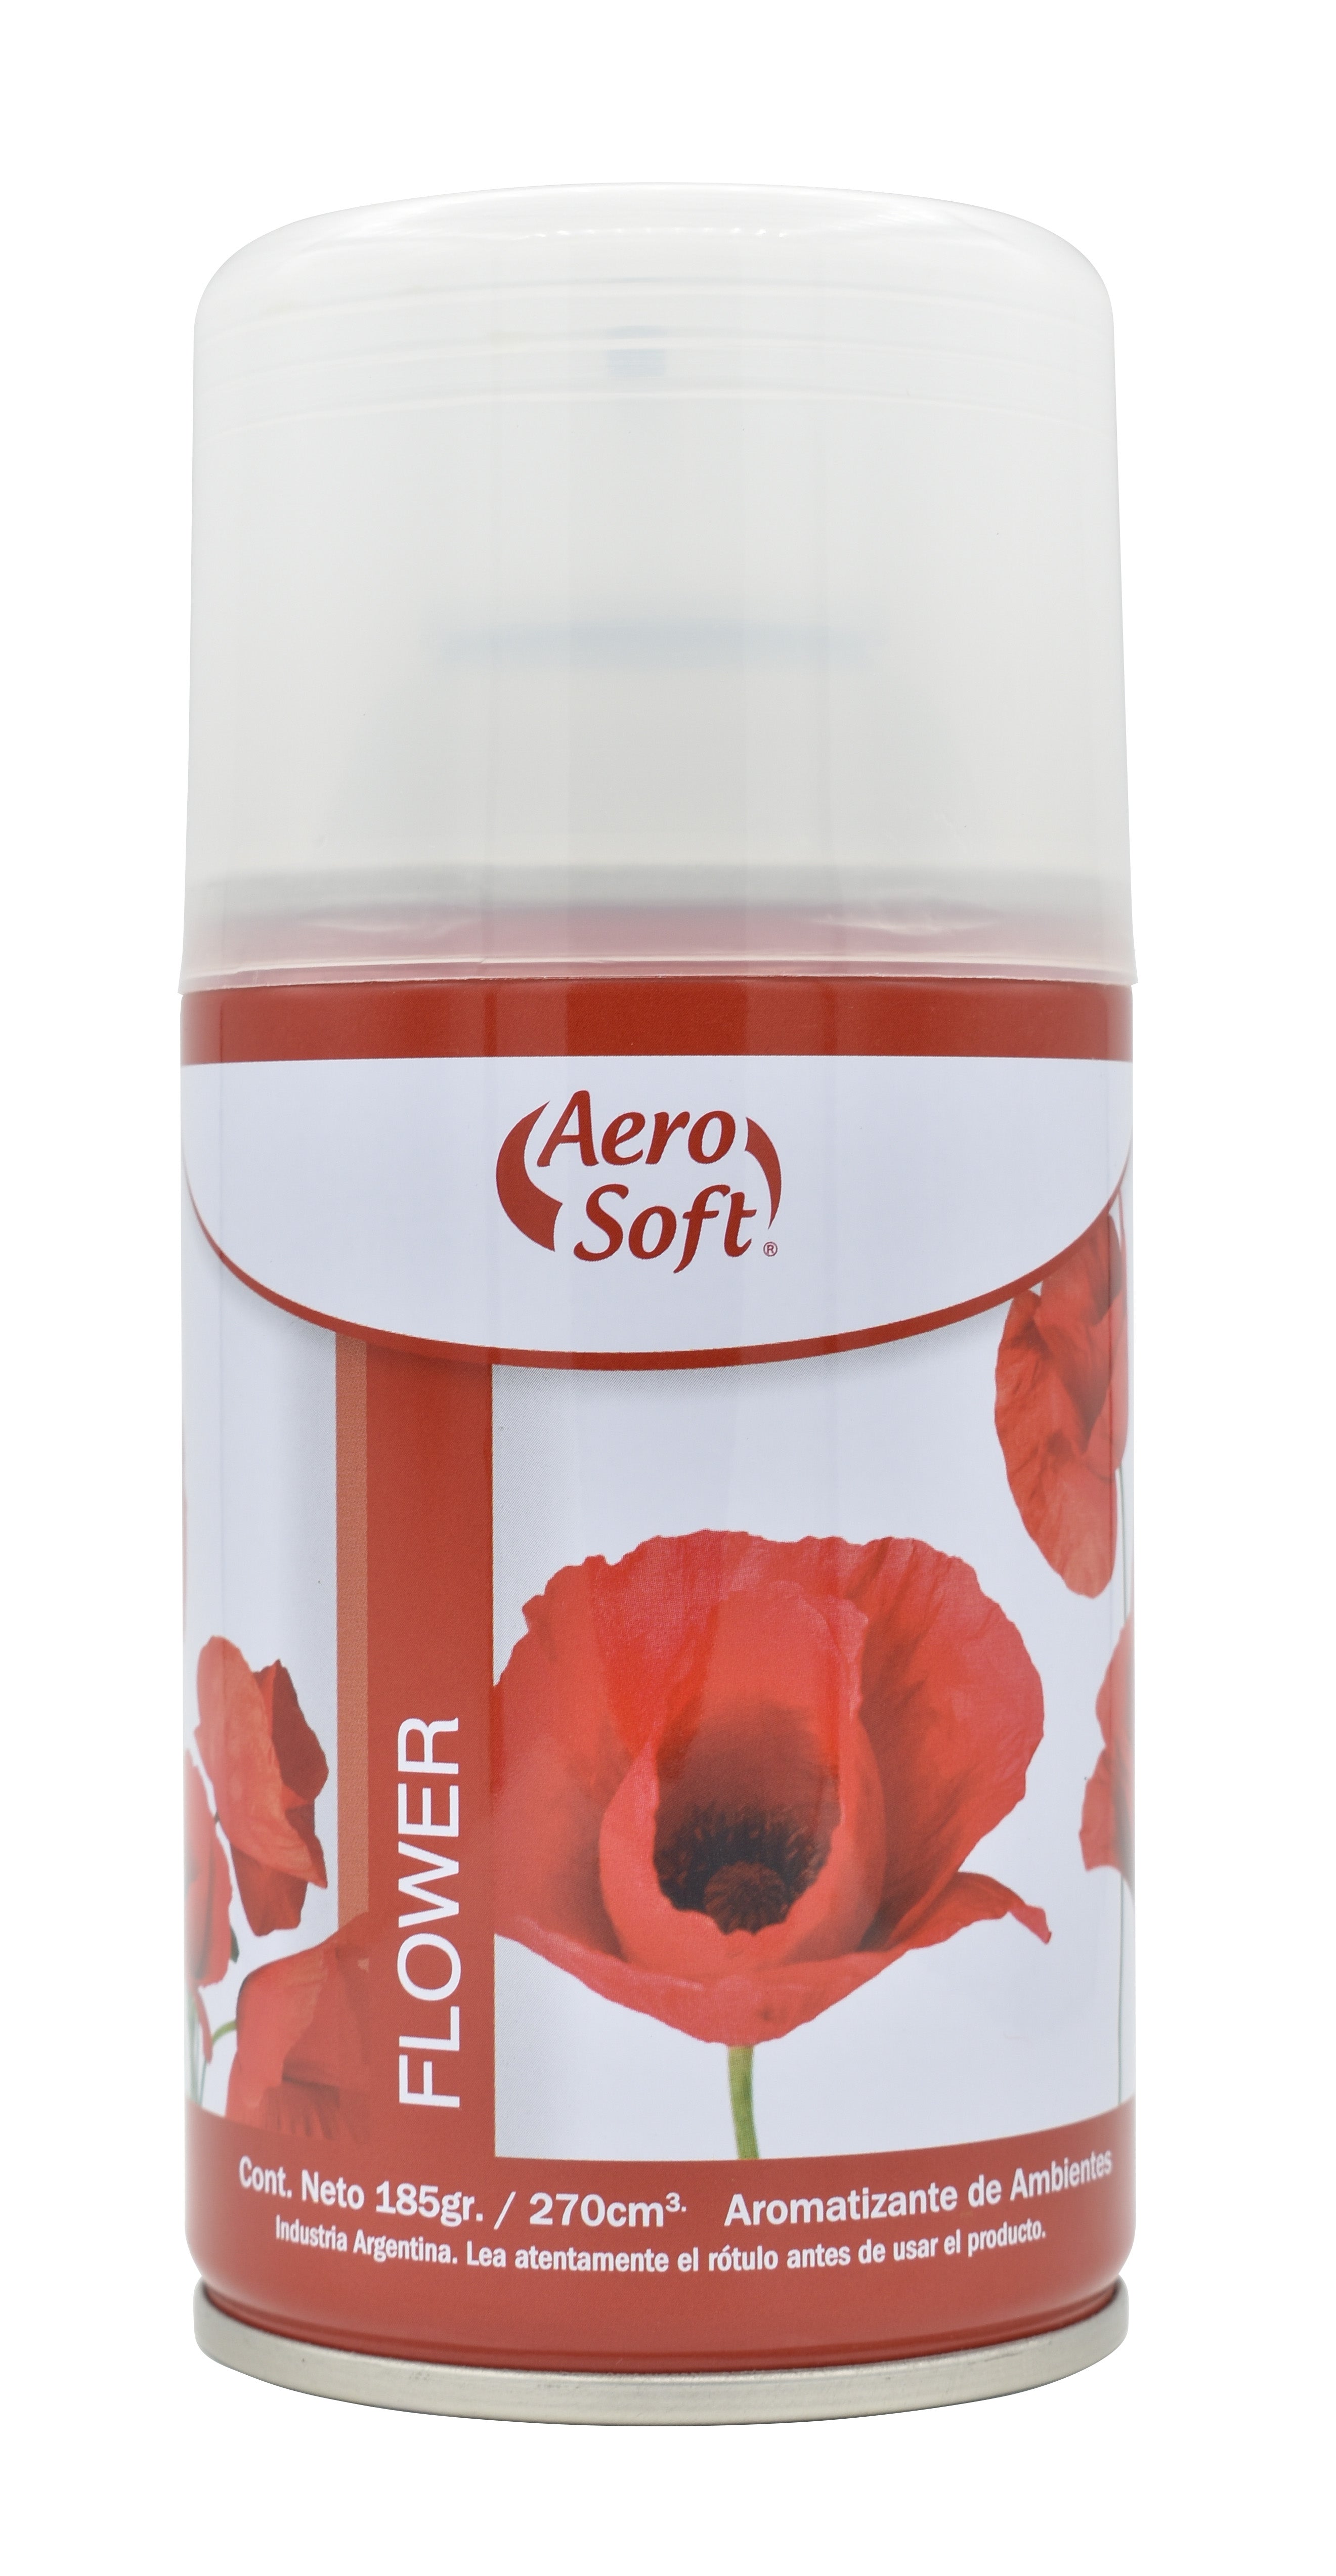 Aerosol - Perfume 270cm³ - AeroSoft